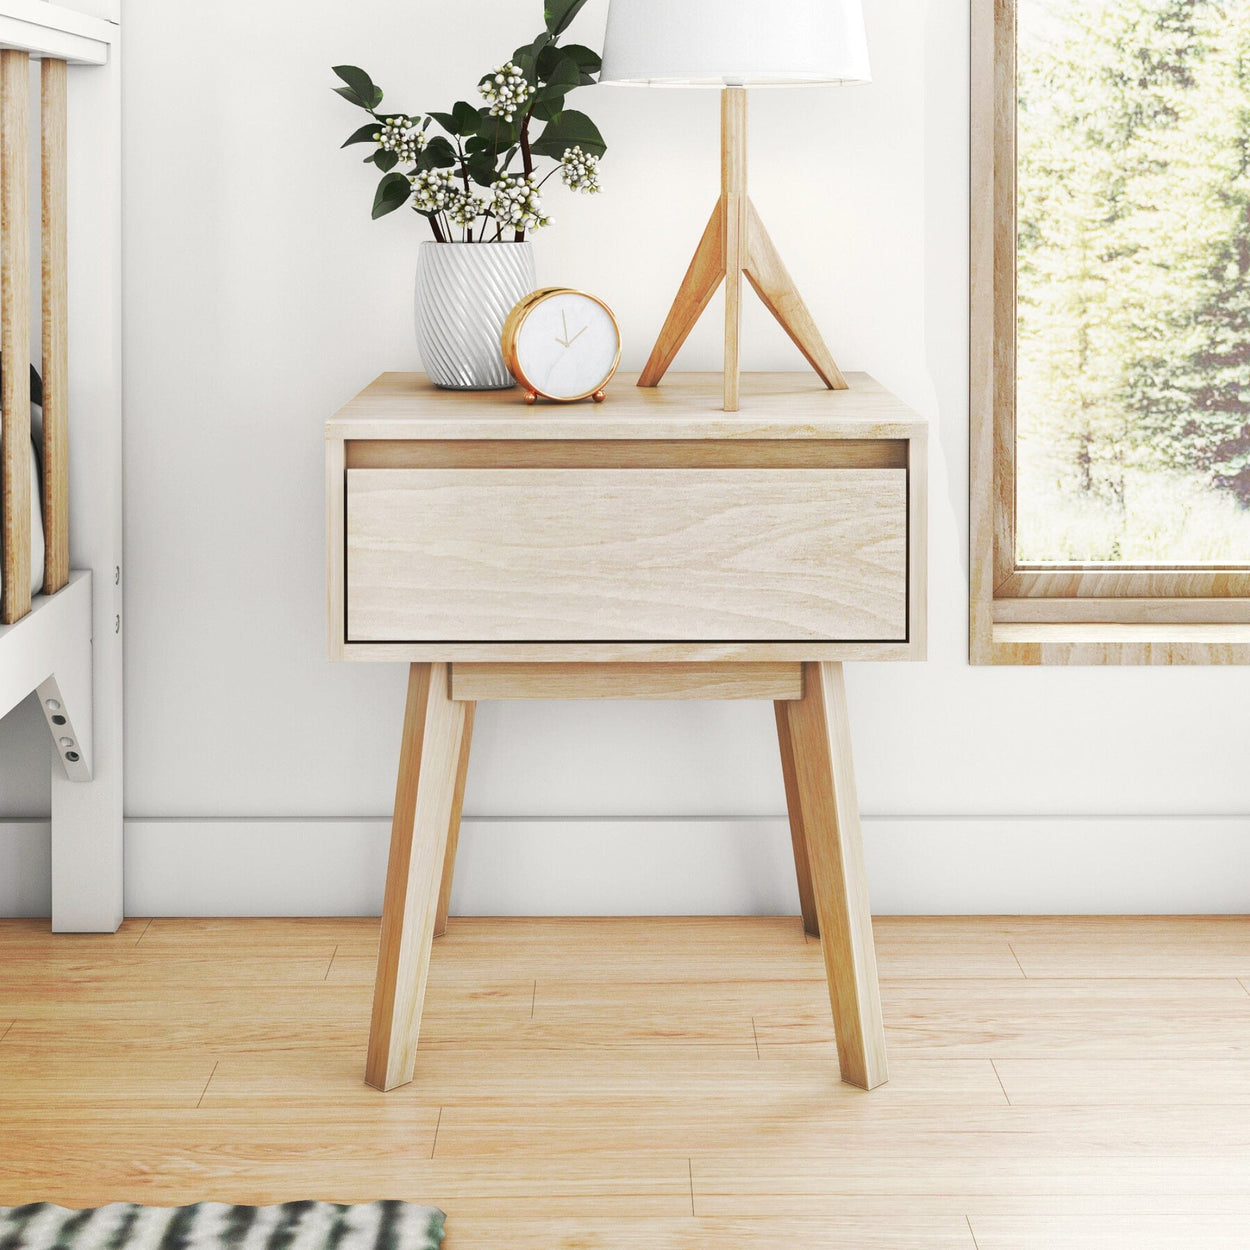 210001-010 : Furniture Scandinavian Nightstand with 1 Drawer, Blonde